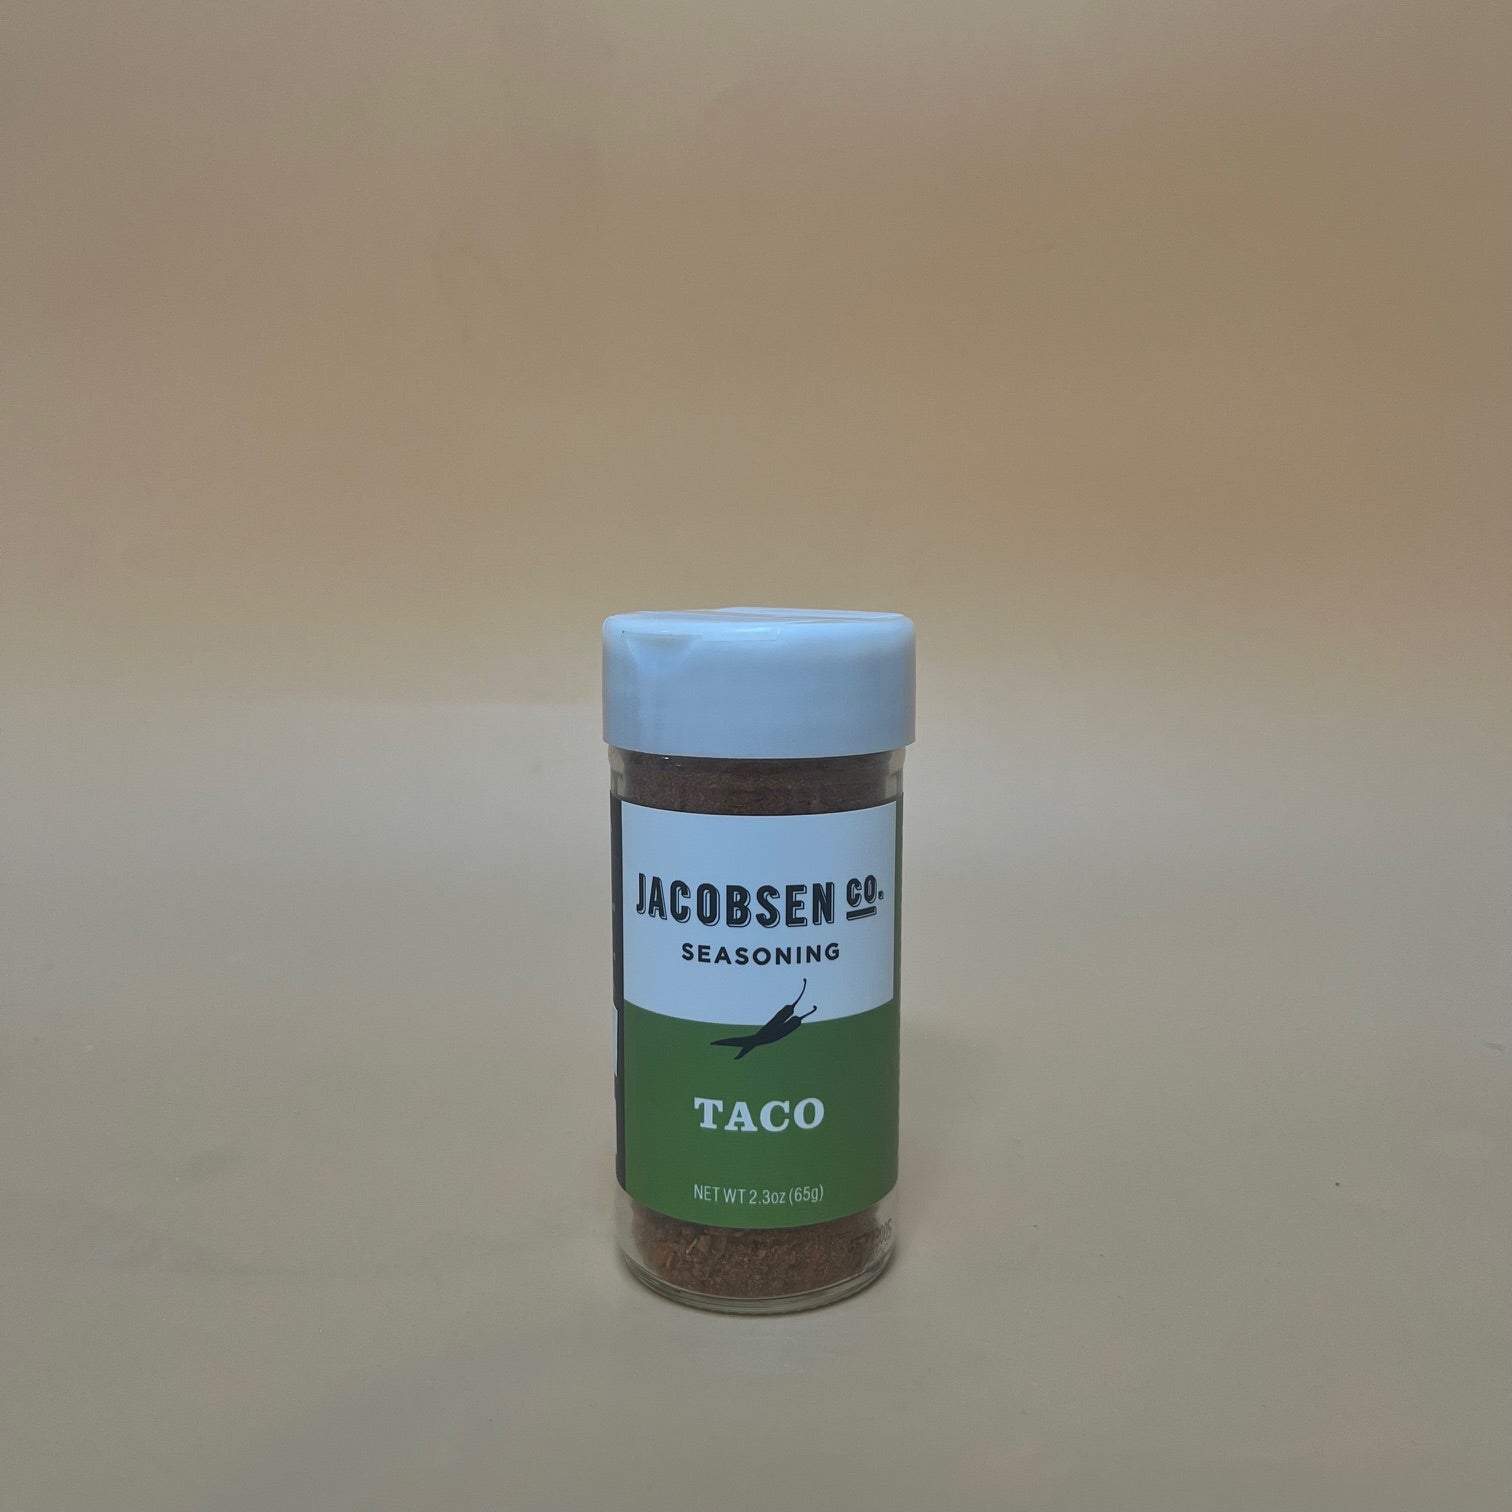 Jacobsen Co. Taco Seasoning